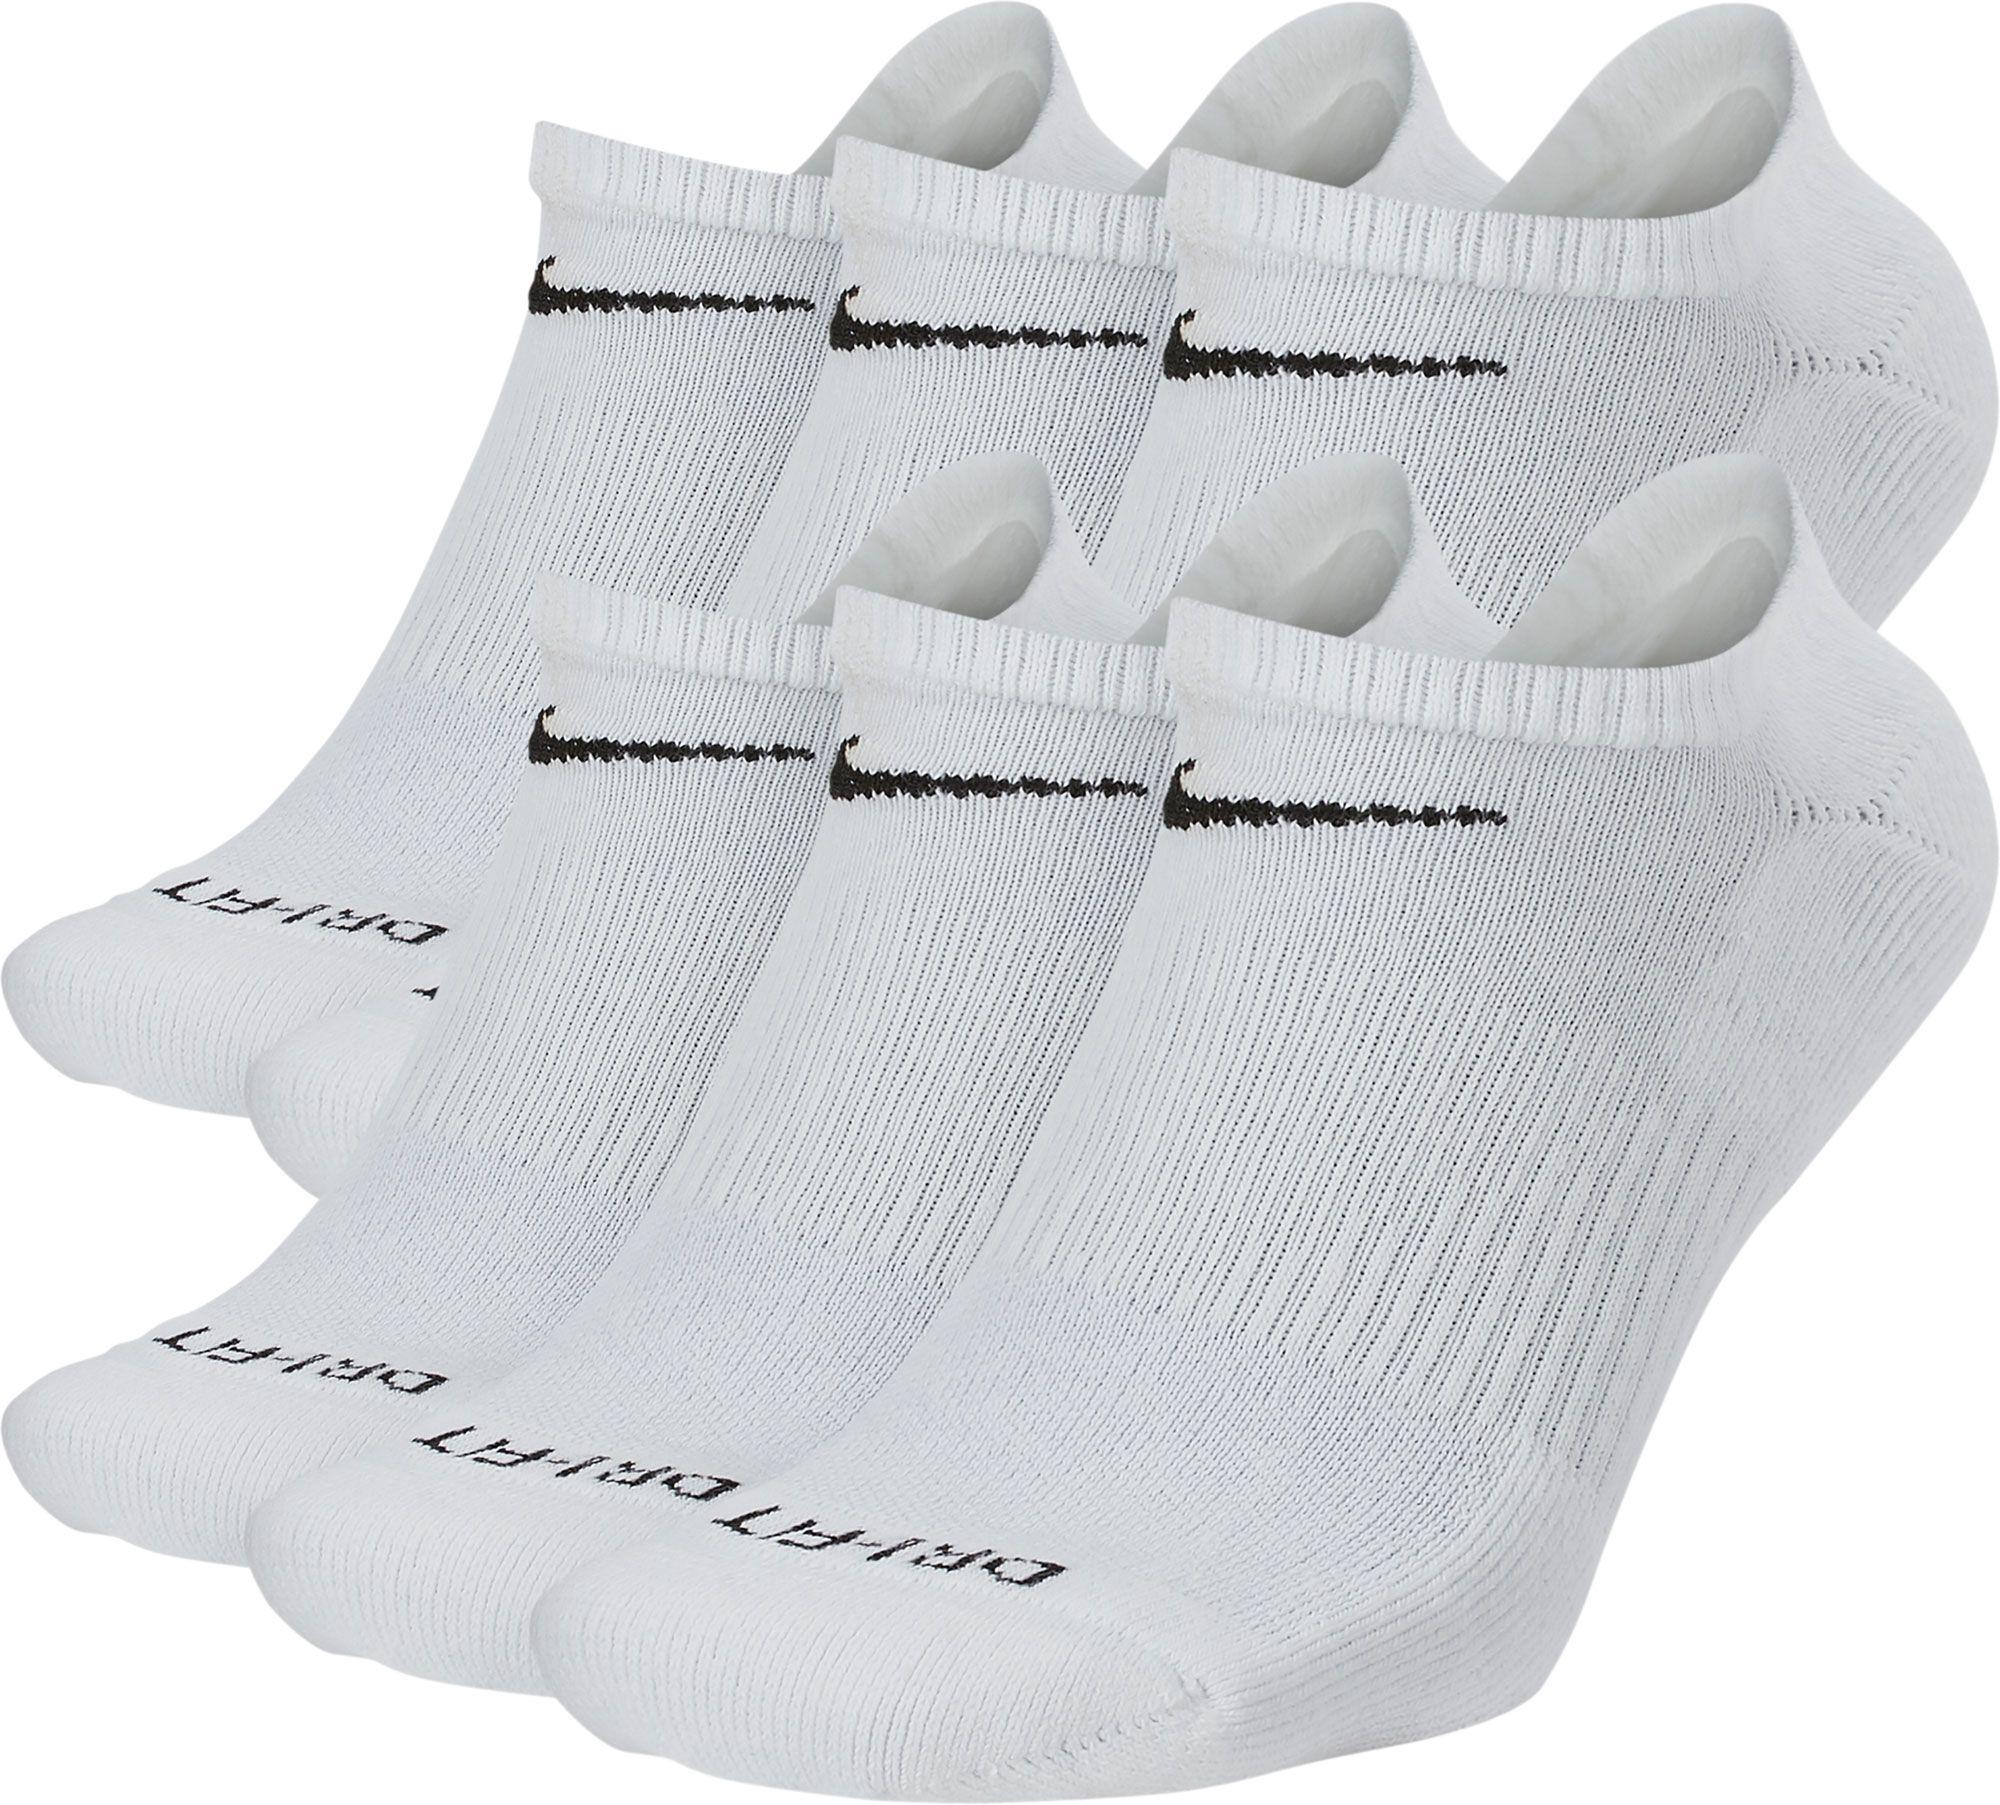 Nike Dri-fit Everyday Plus Cushion Training No-show Socks - 6 Pack in ...